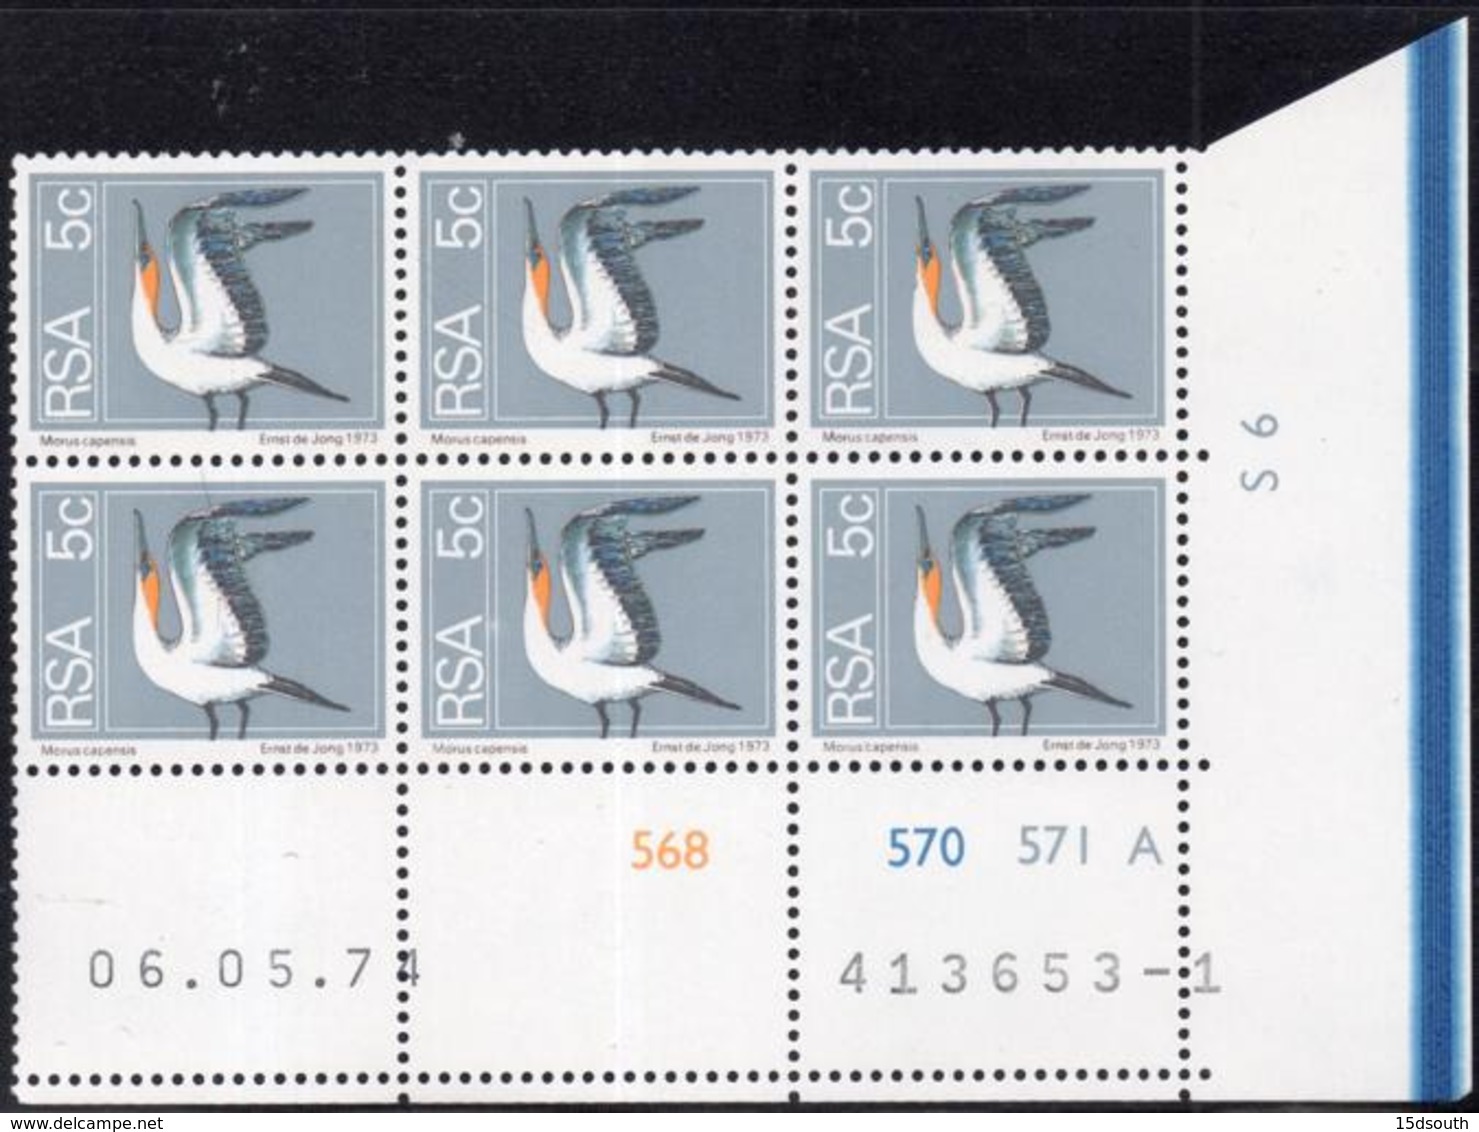 South Africa - 1974 2nd Definitive 5c Gannet Control Block (1974.05.06) Pane A (**) # SG 352 - Blocs-feuillets